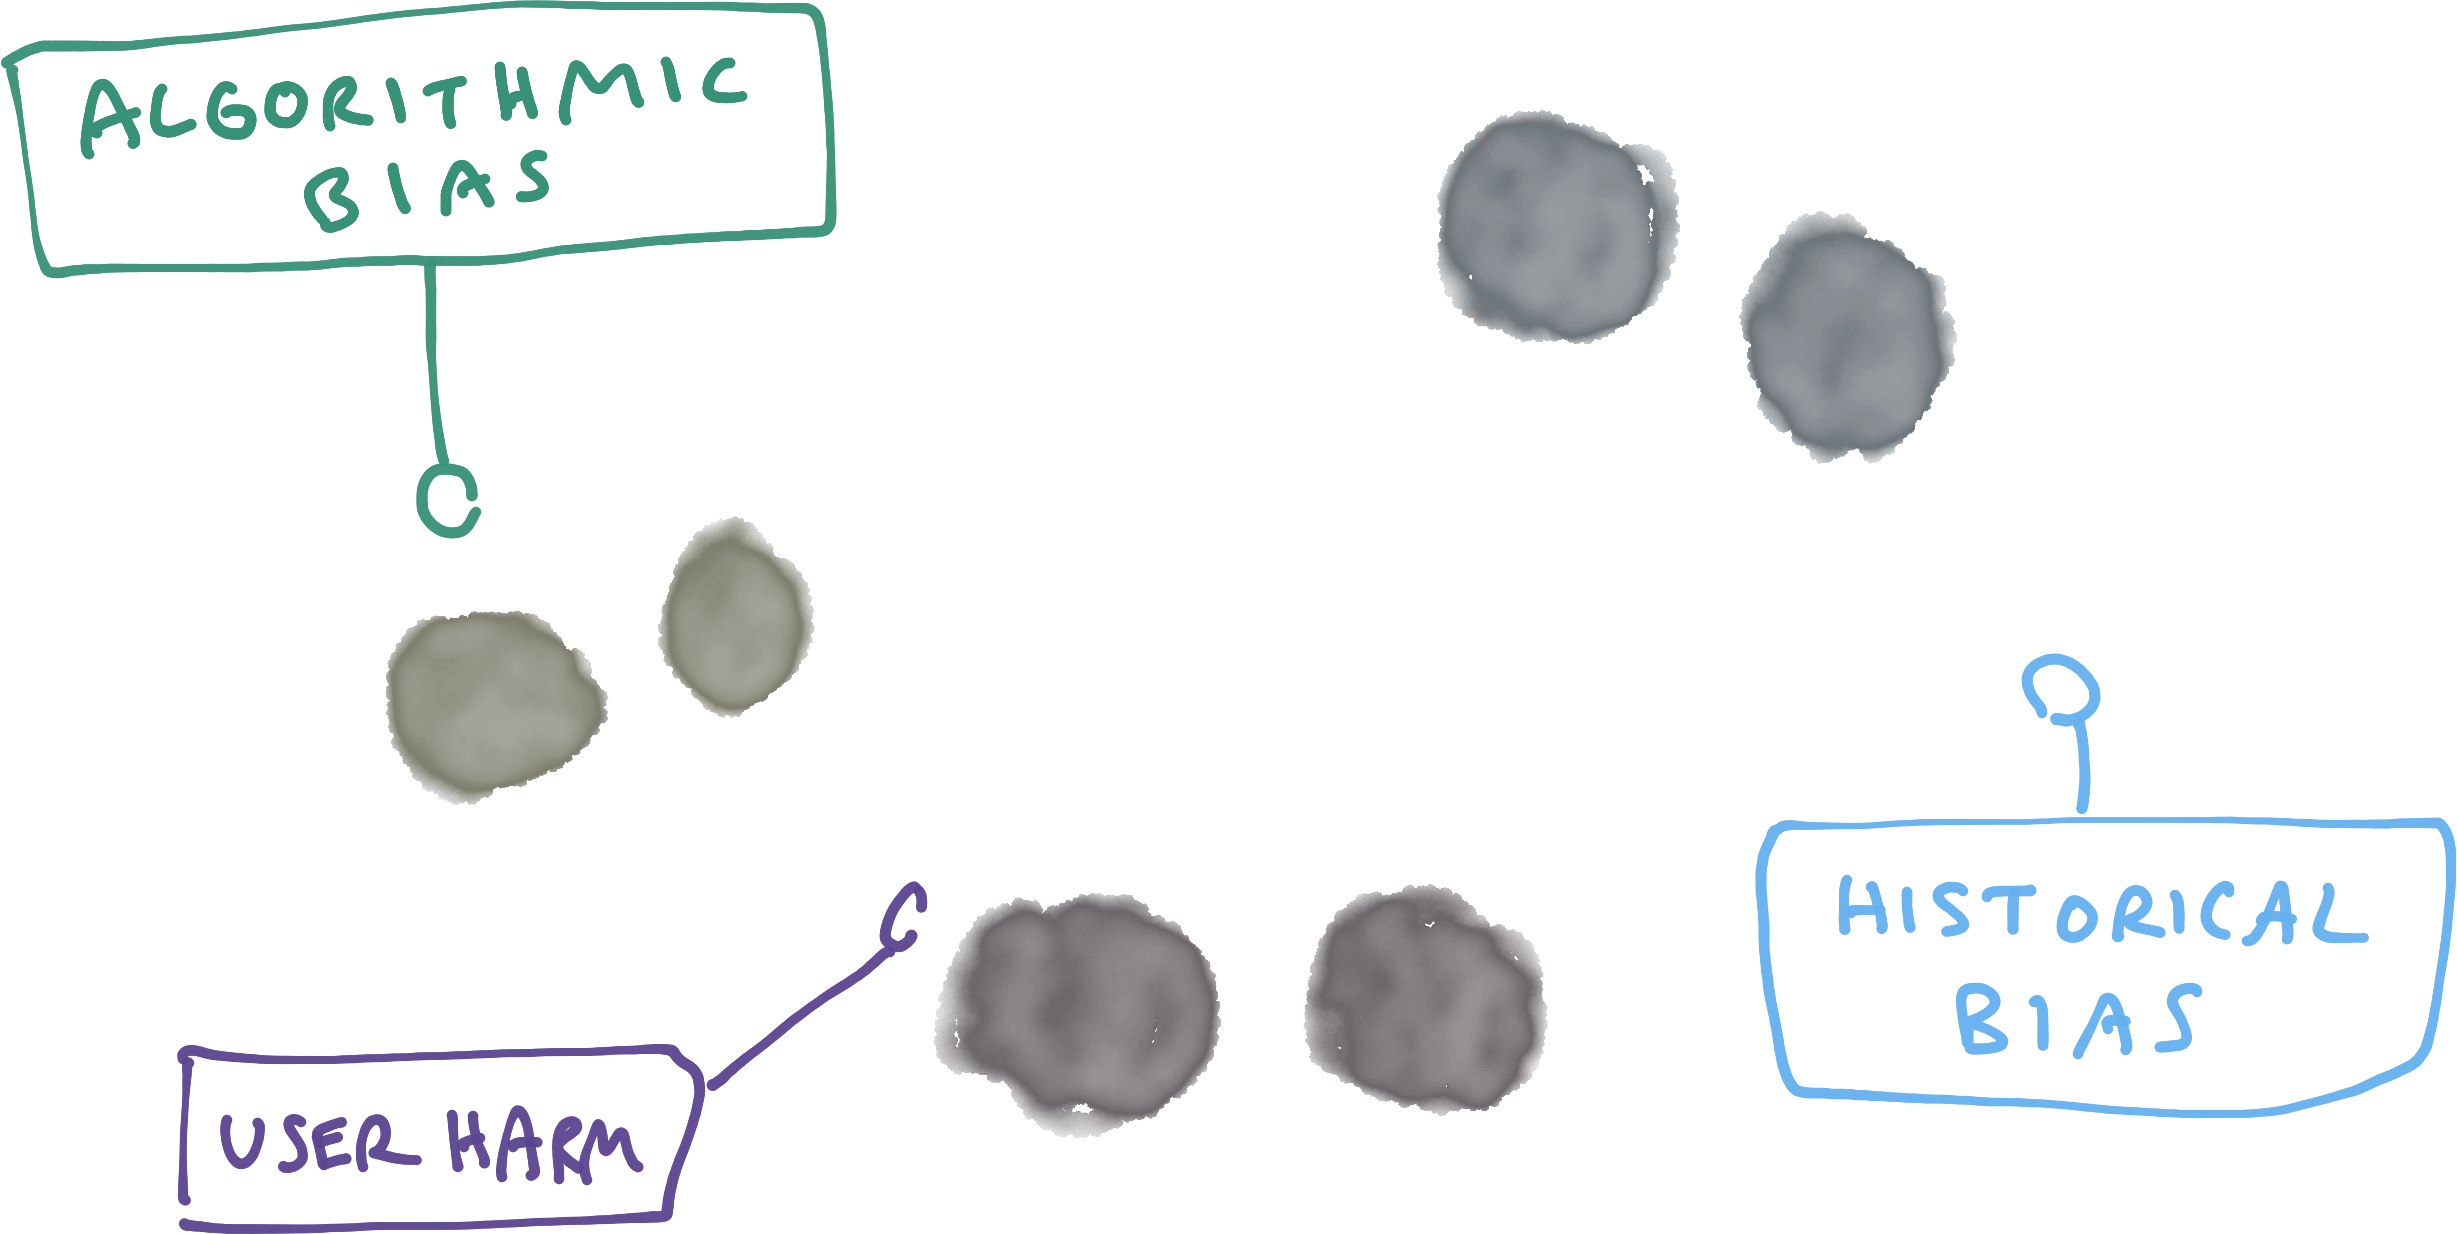 Three eye glasses with labels, User Harm, Historical Bias, Algorithmic Bias